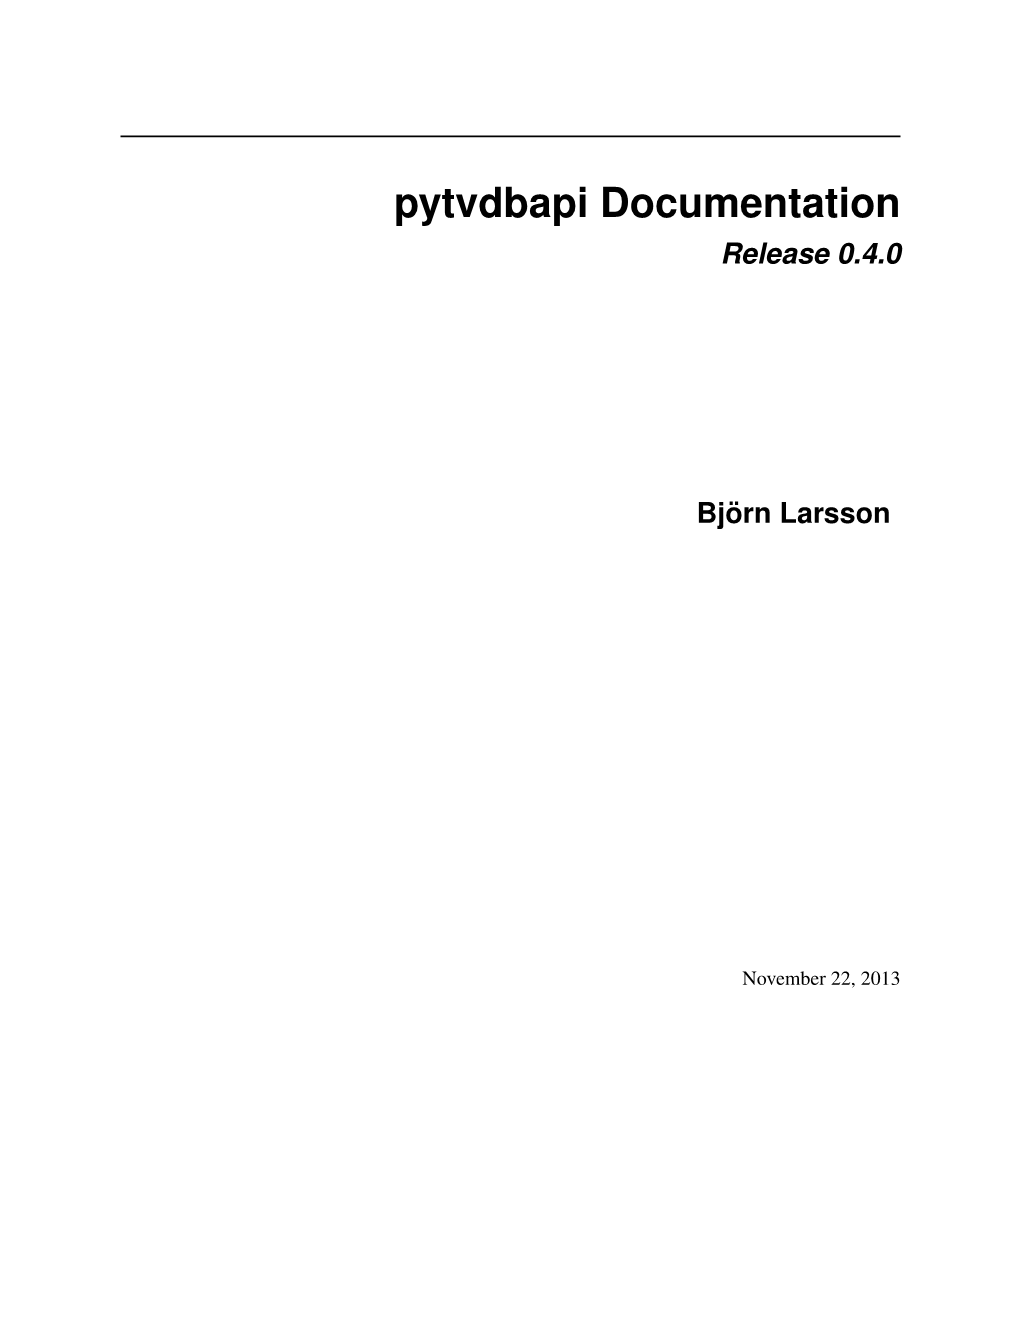 Pytvdbapi Documentation Release 0.4.0